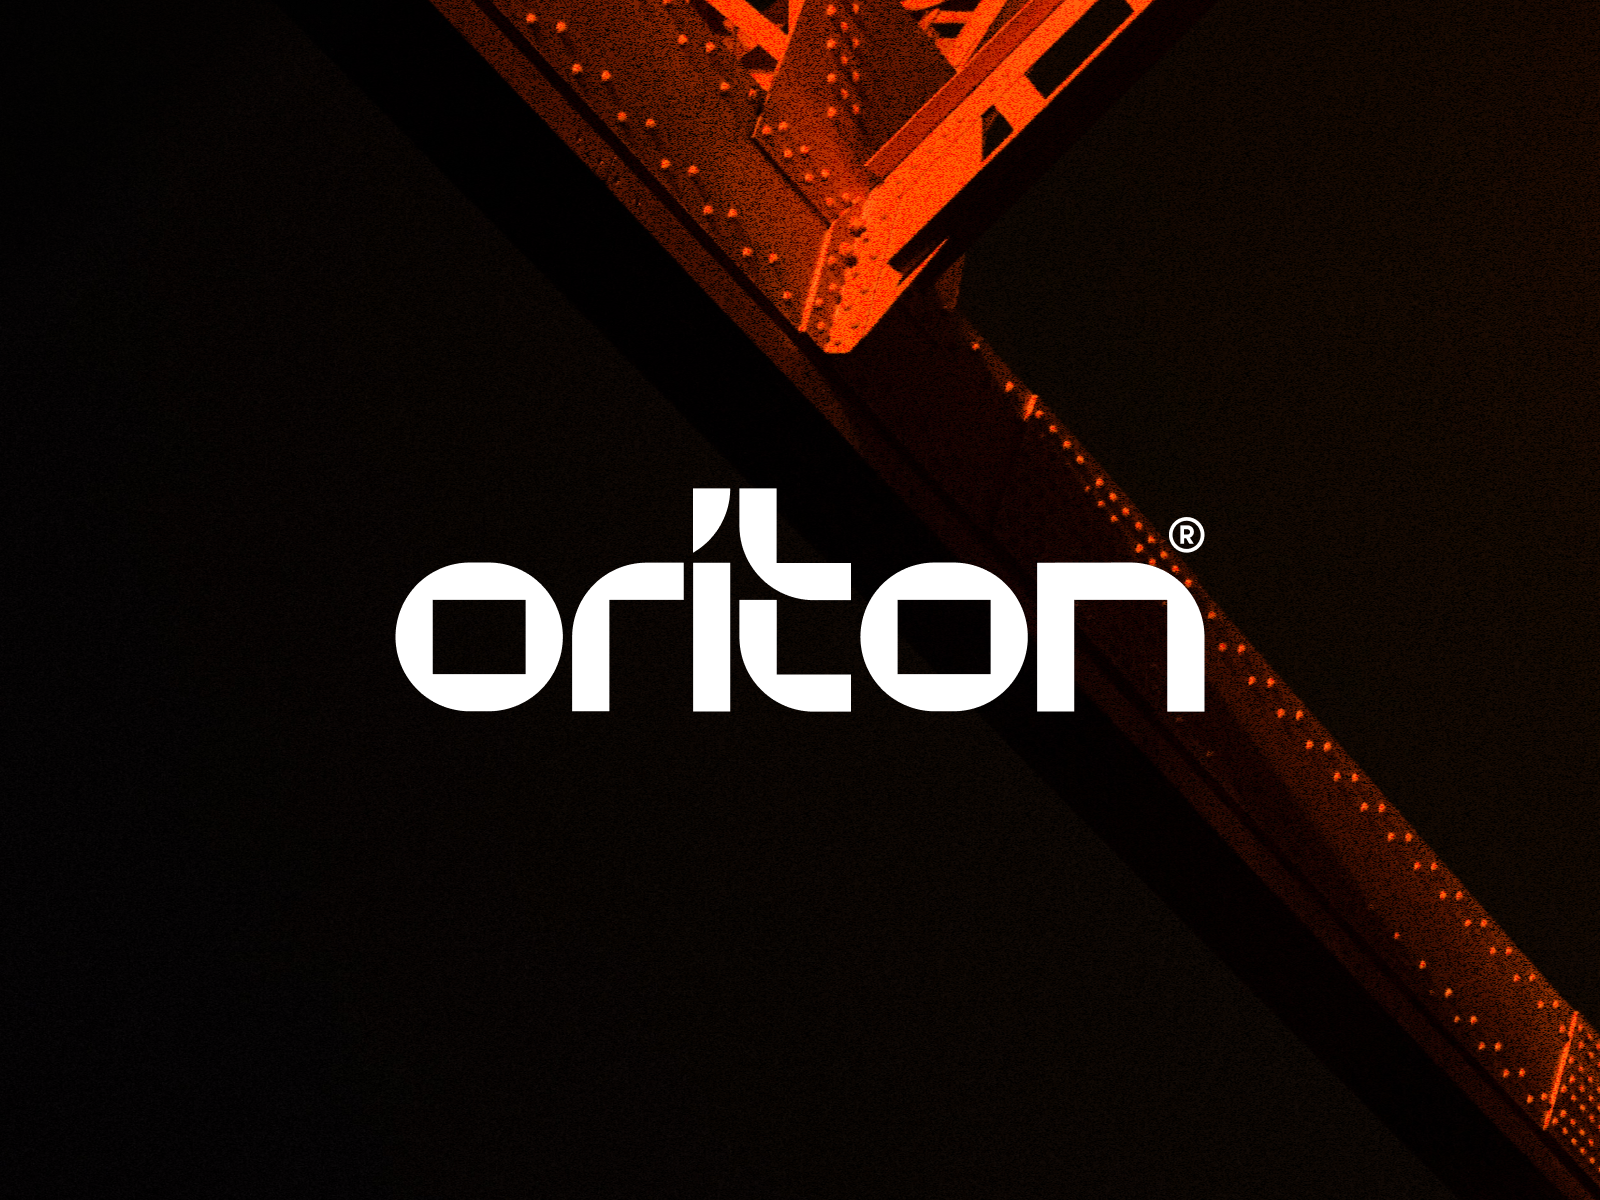 Oriton Logo & Brand Identity Design